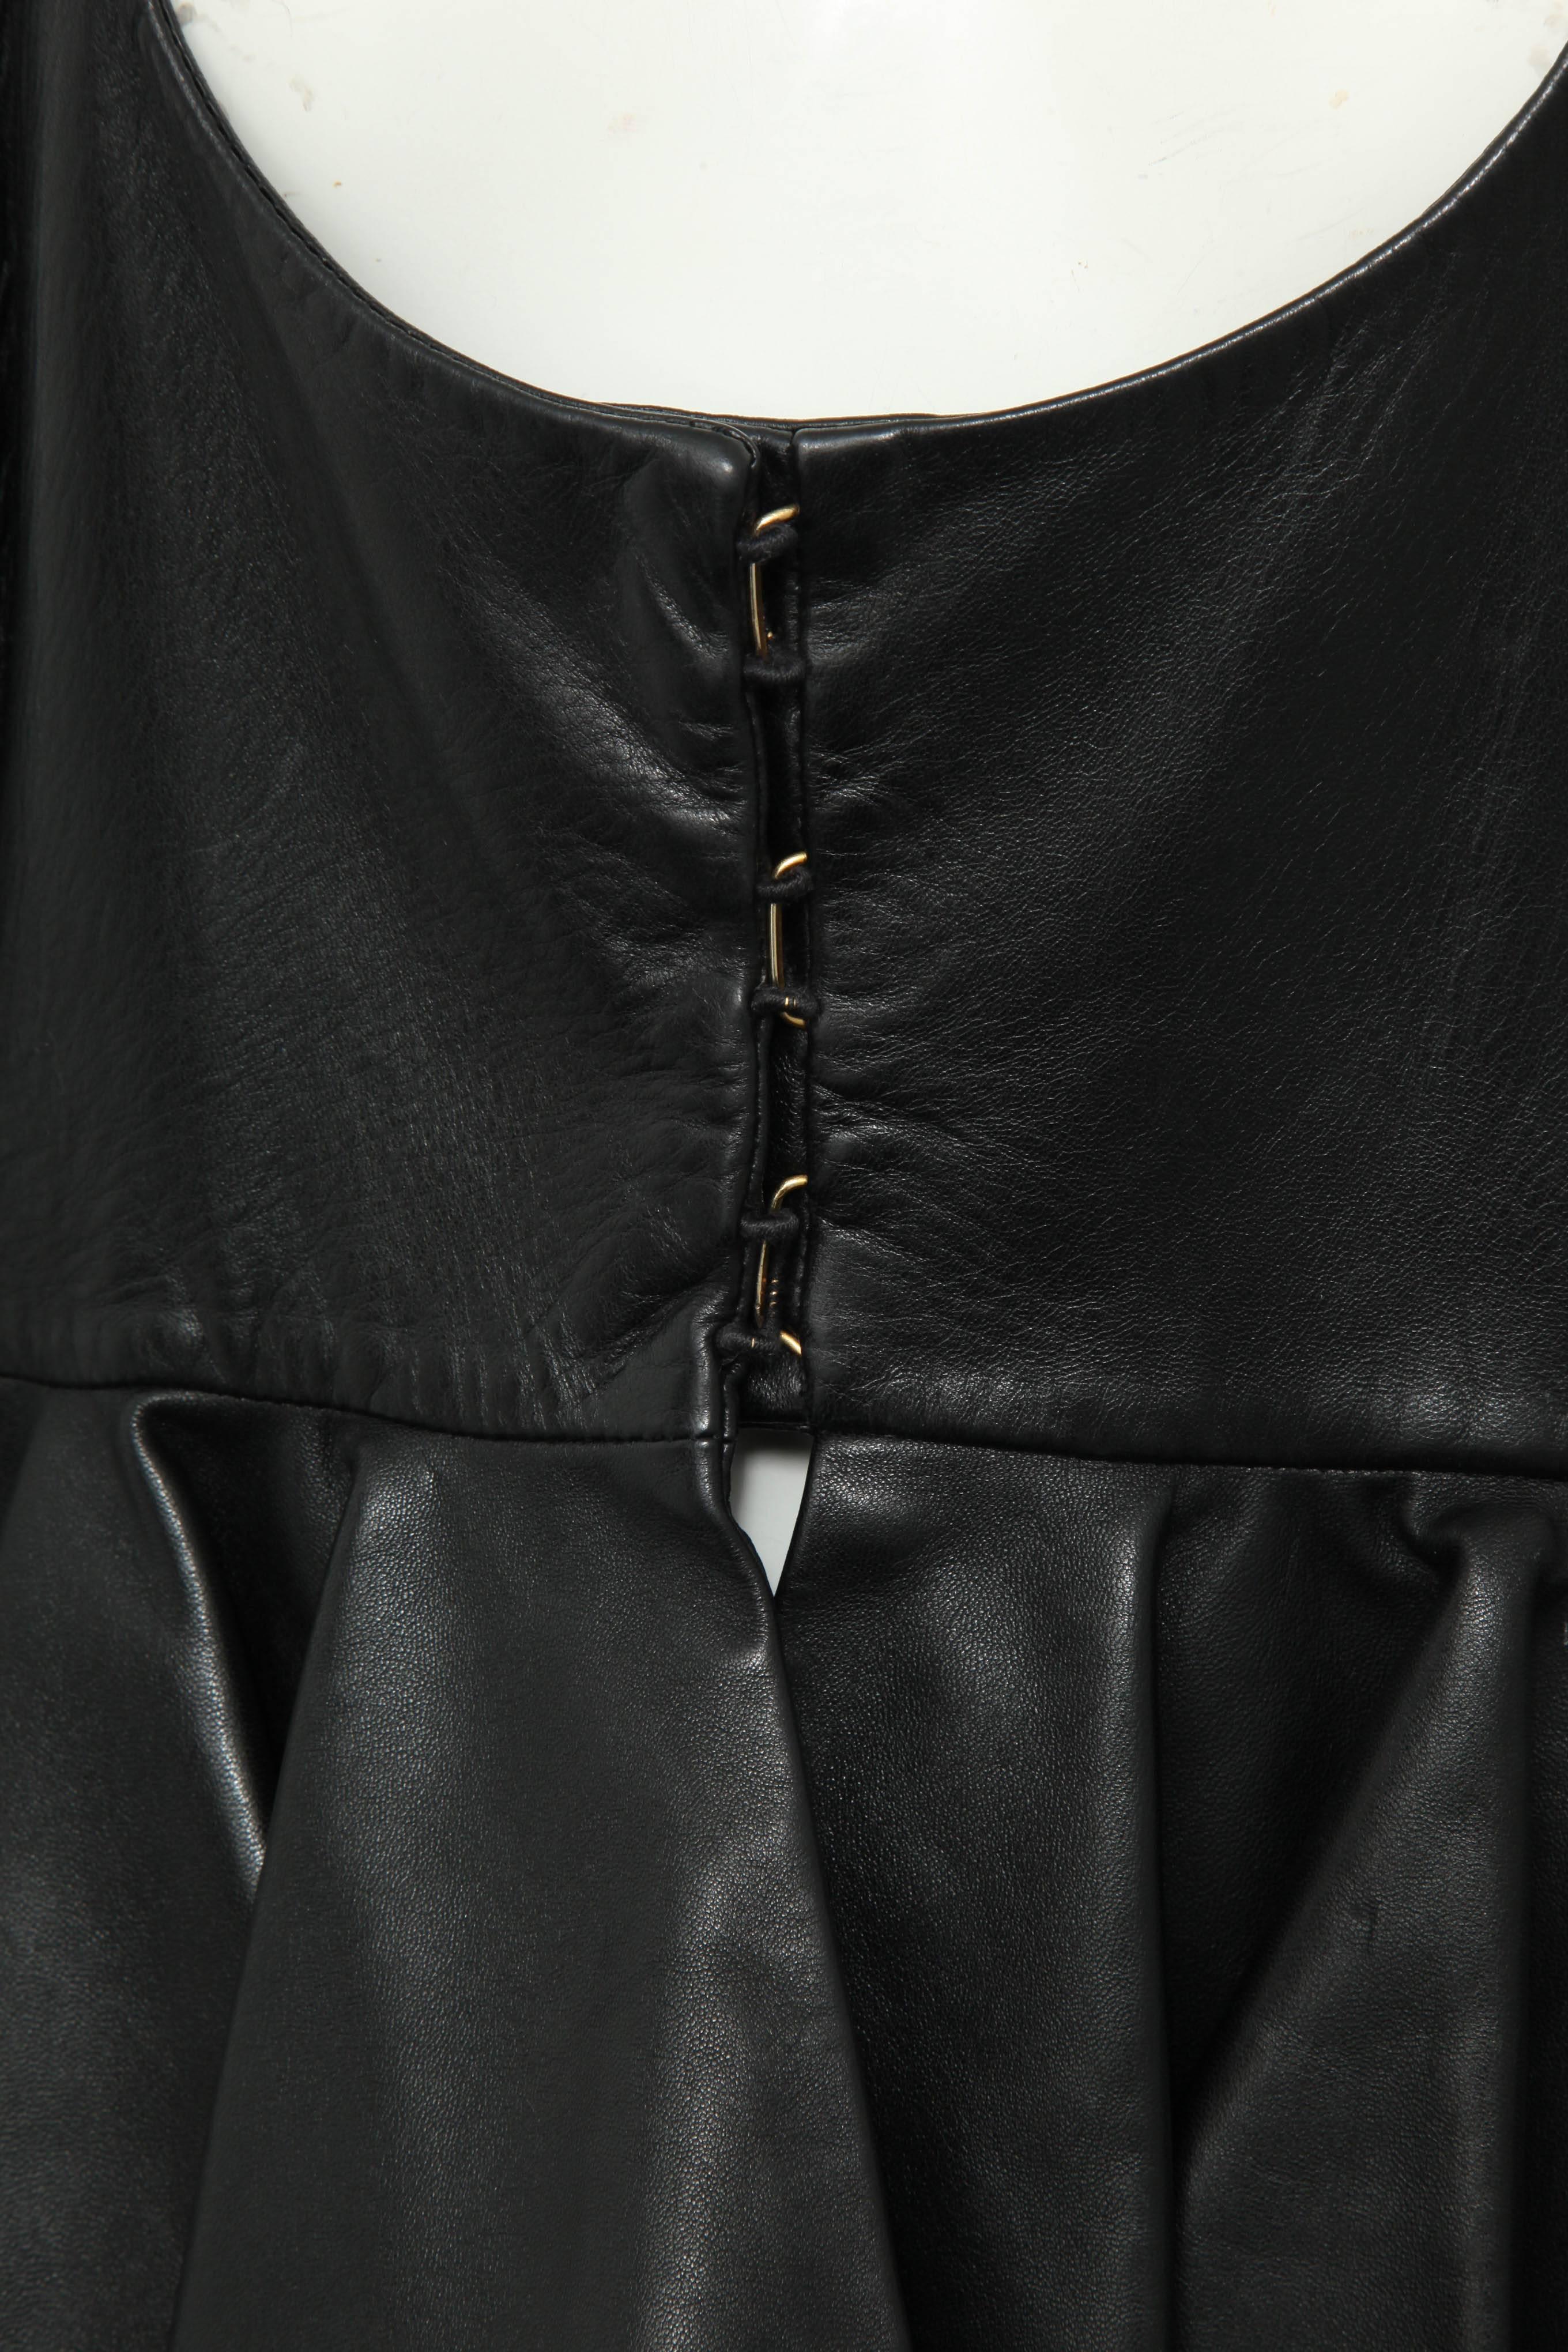 Alexander McQueen Lamb skin leather jacket in black. It has beautiful details in the waist. Size 42.